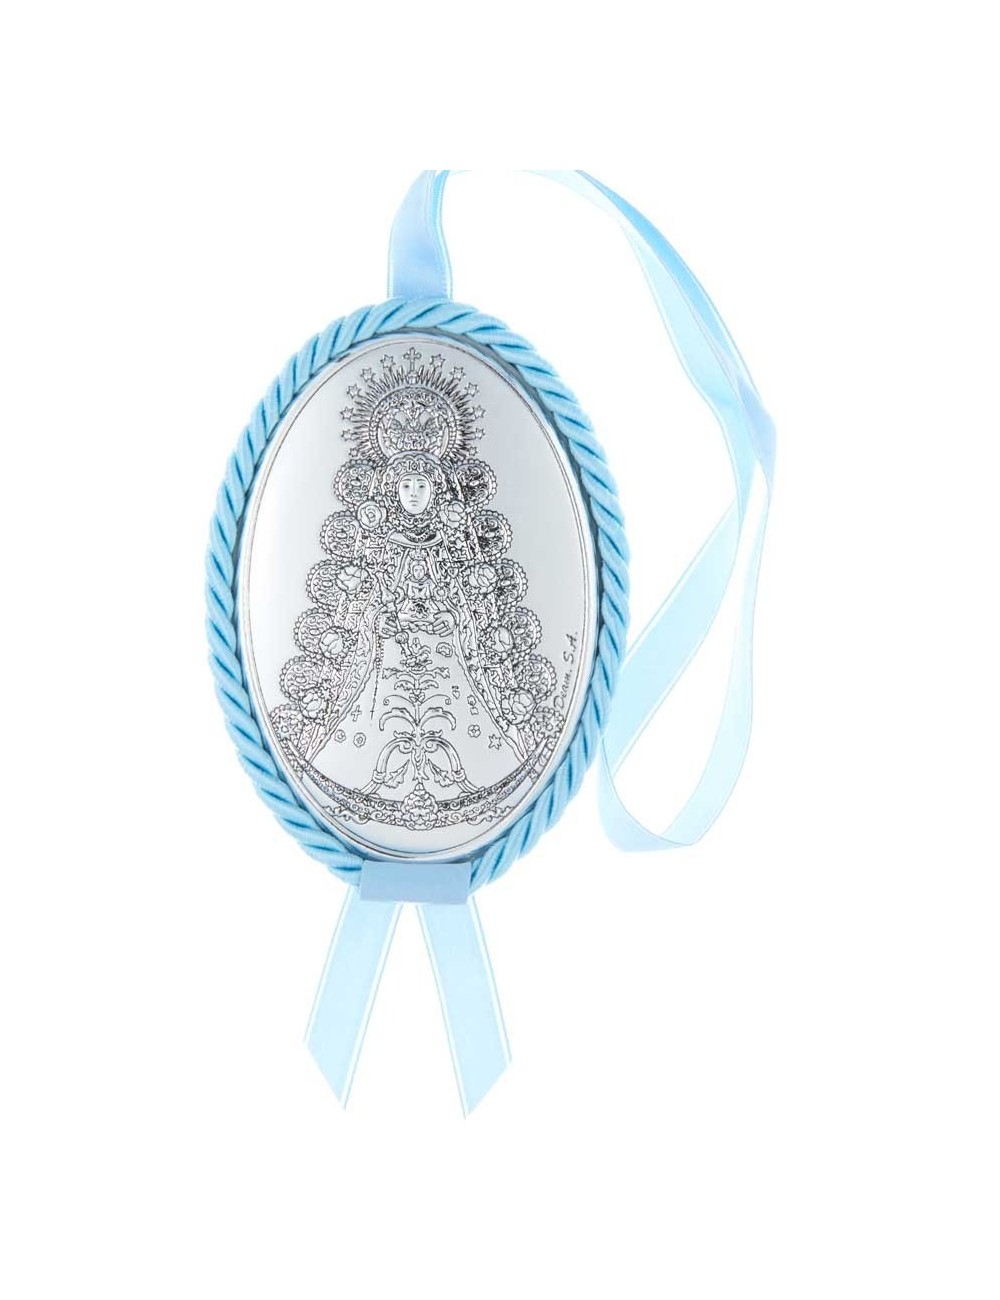 Medalla cuna Virgen del Rocío polipiel azul oval musical